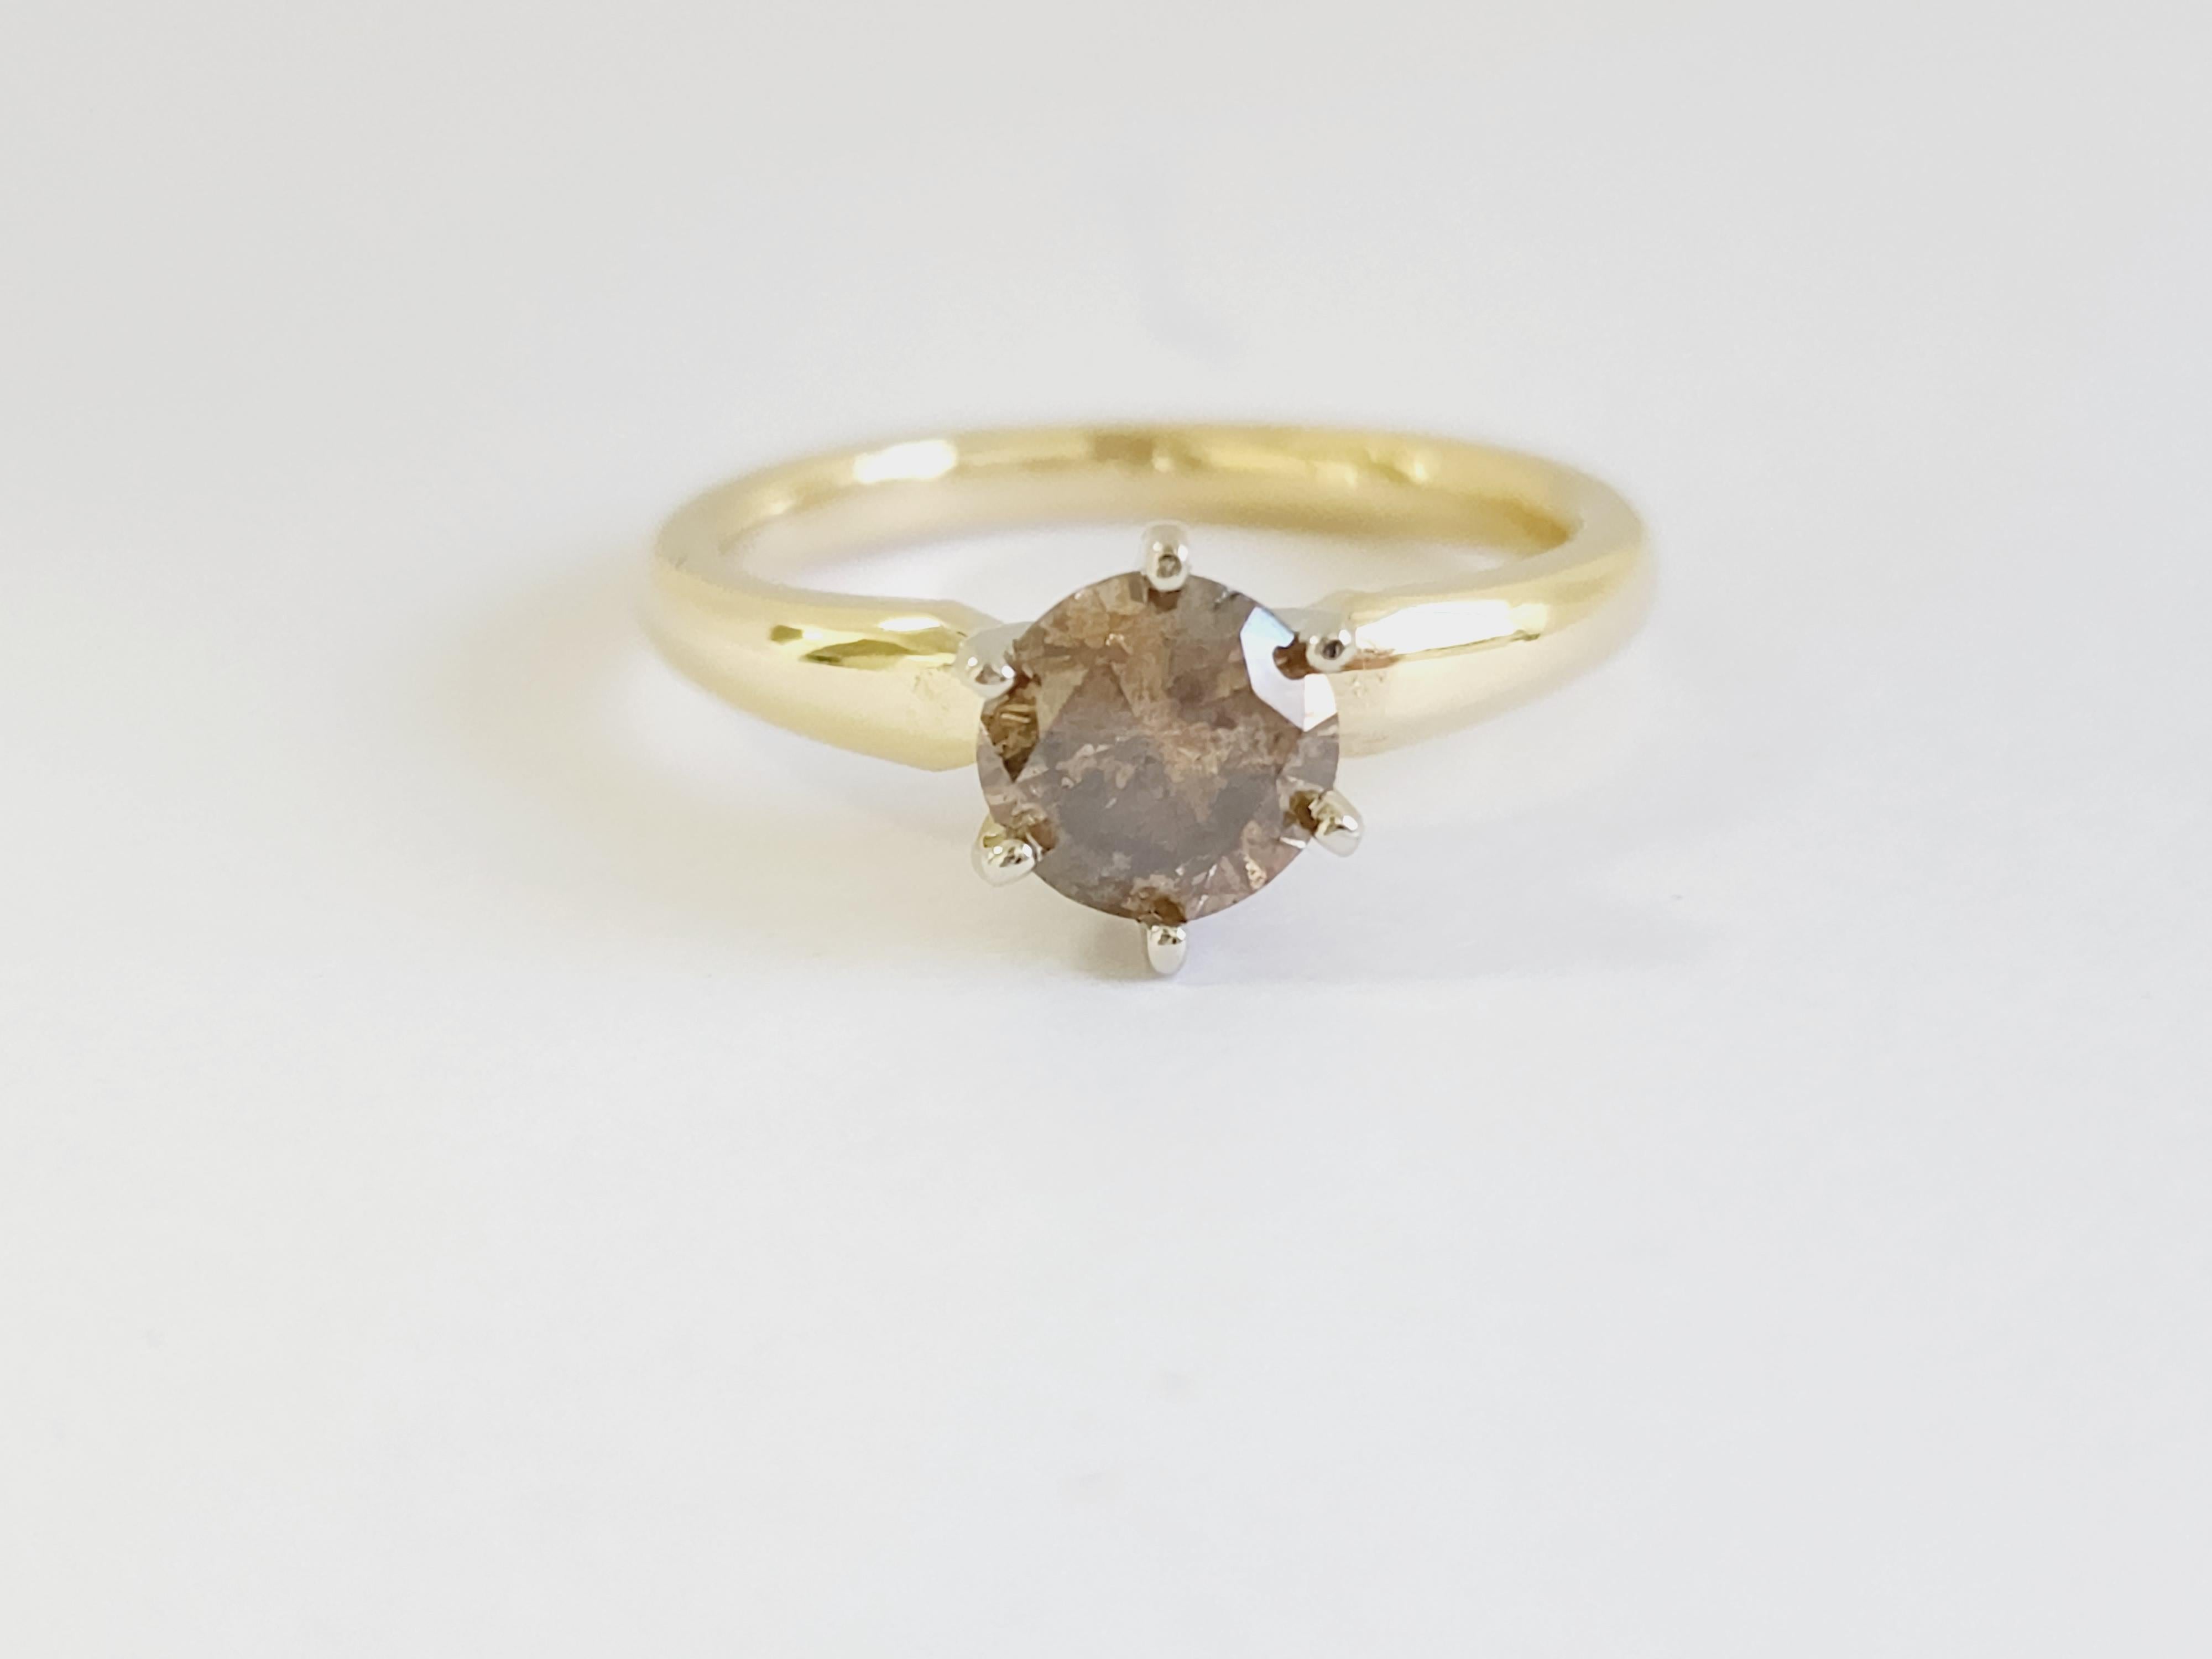 Natural fancy dark yellowish brown round diamond weighing 1.05 carats. Set on 6-prong 14K yellow gold.
Ring size: 6.75